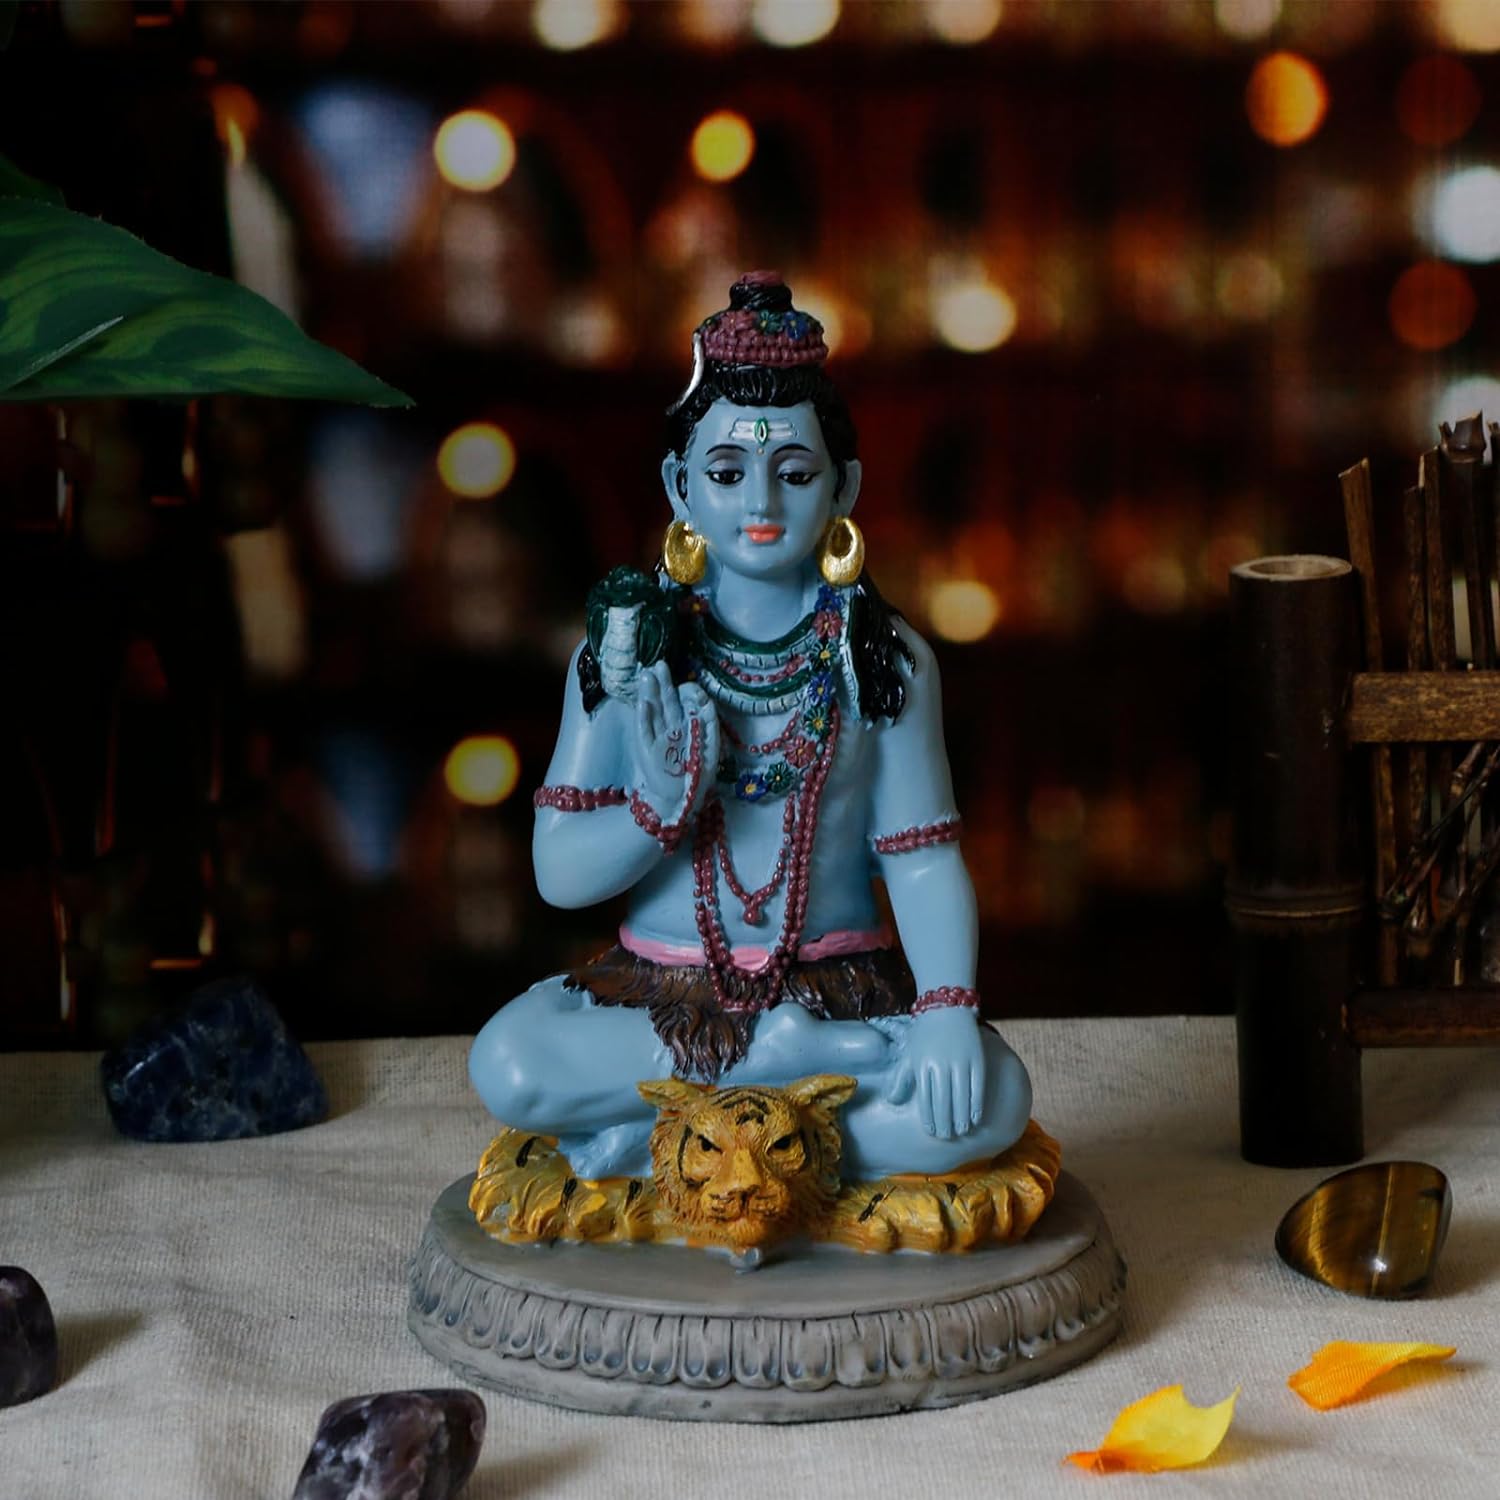 Hindu God Lord Shiva Statue - 5.7”H Shiva Idol Murti Pooja Item Puja Diwali Gifts for Indian Wedding Baby Shower Housewarming Return Gifts for Guest Altar Meditation Yoga Room Spiritual Decor